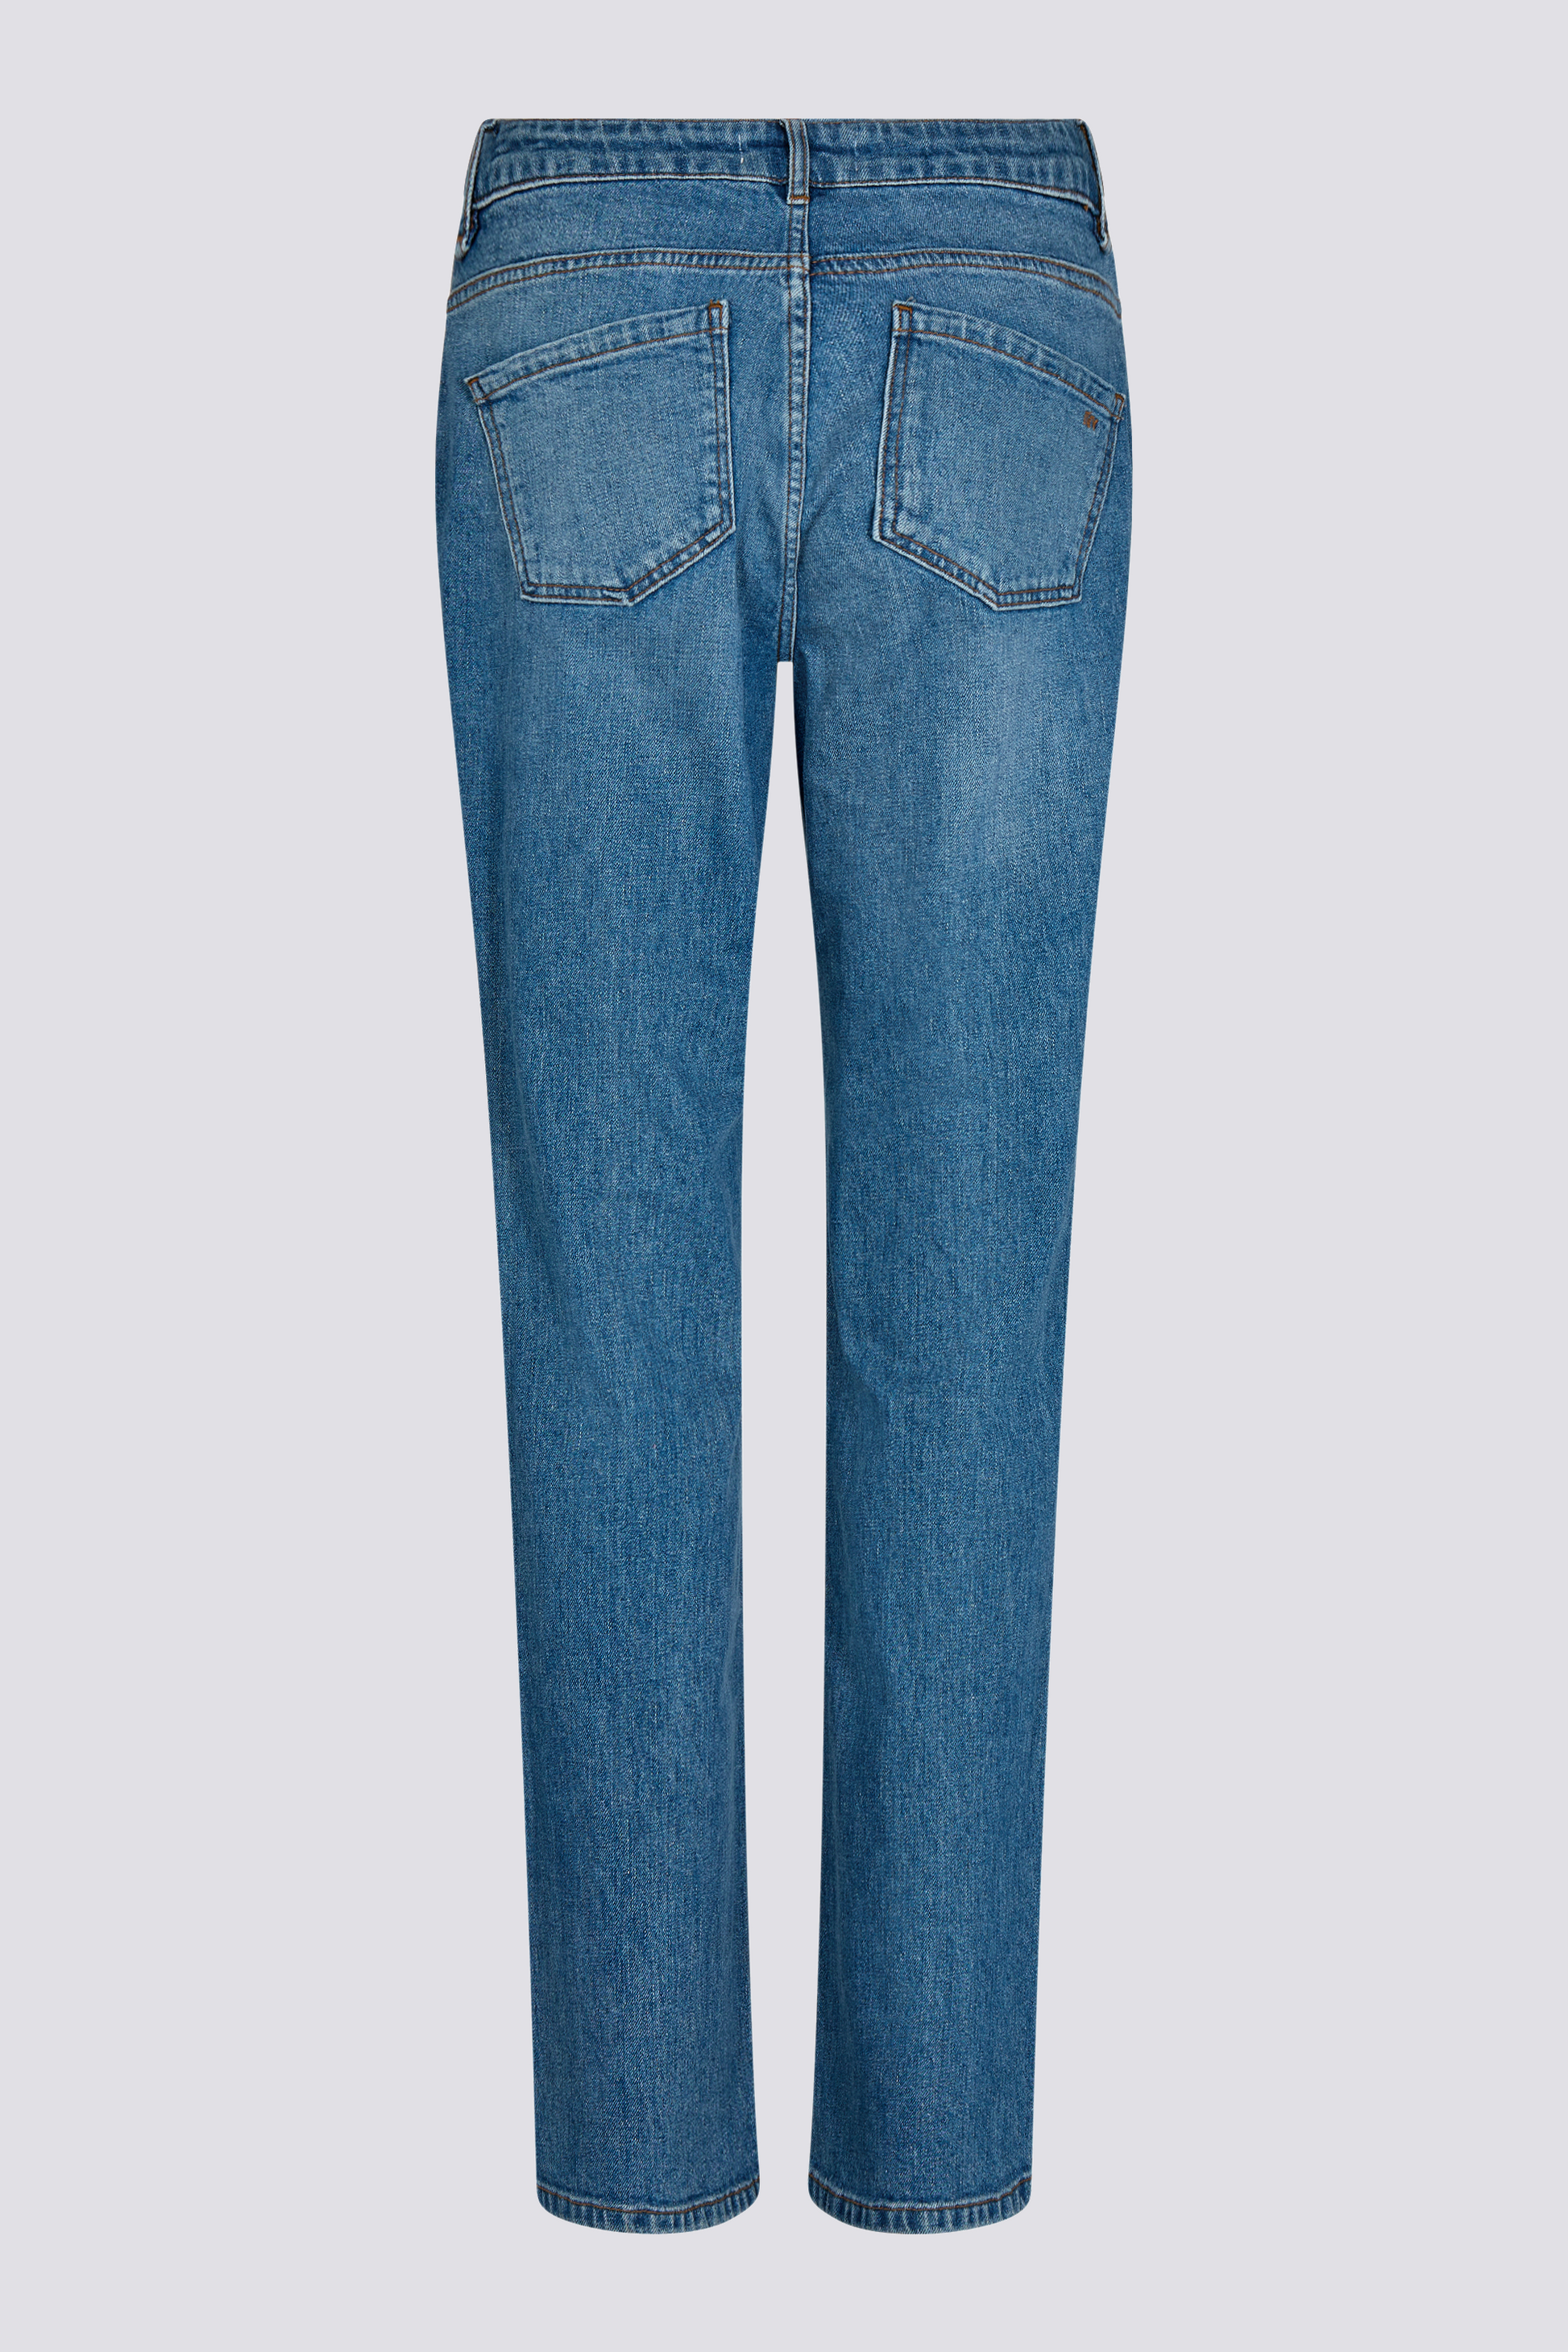 IVY Copenhagen IVY-Lulu Jeans Wash Vintage Indigo Jeans & Pants 51 Denim Blue